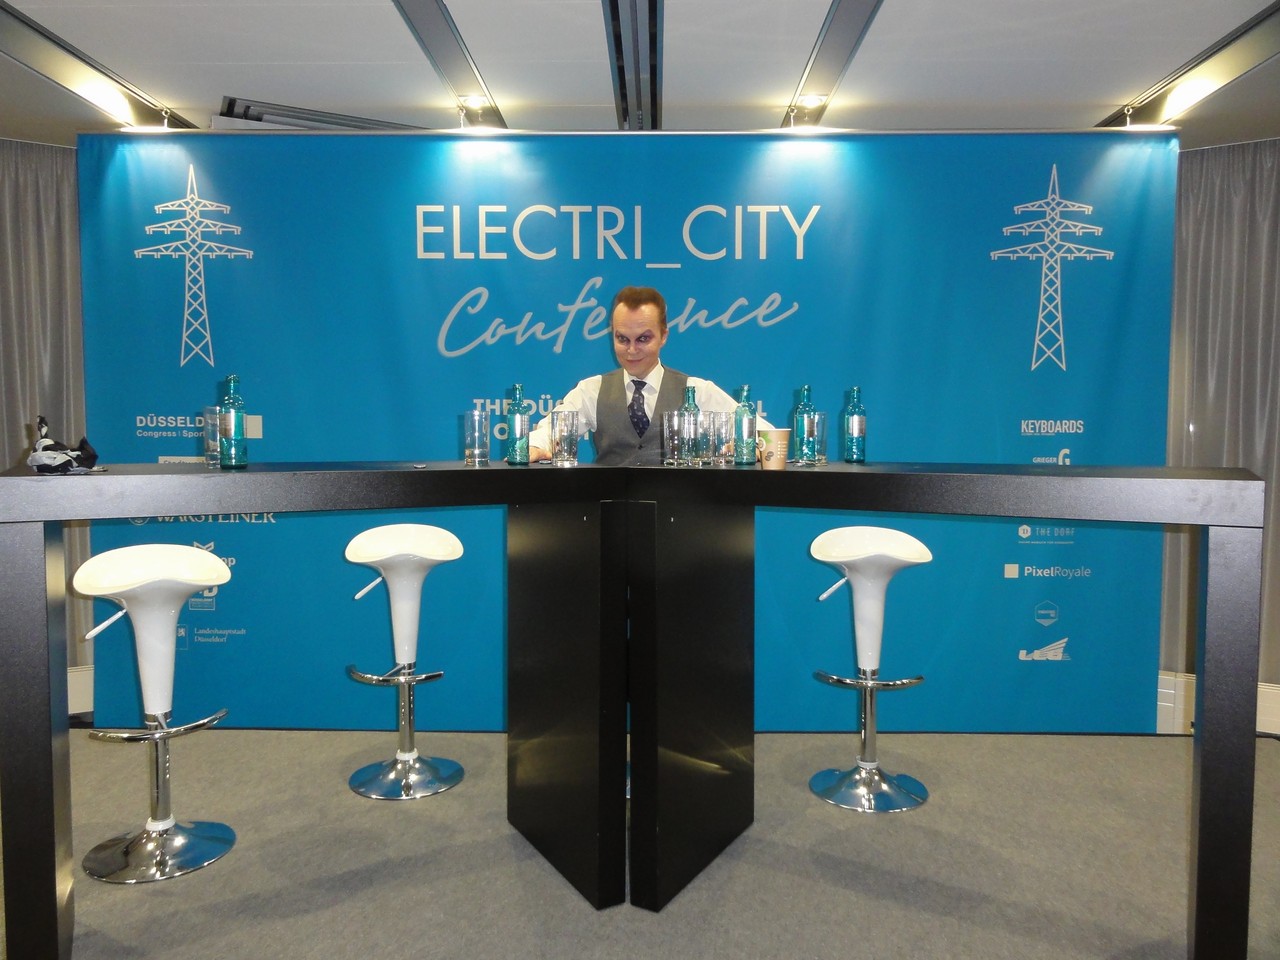 087 Electri_City Conference 2016.jpg